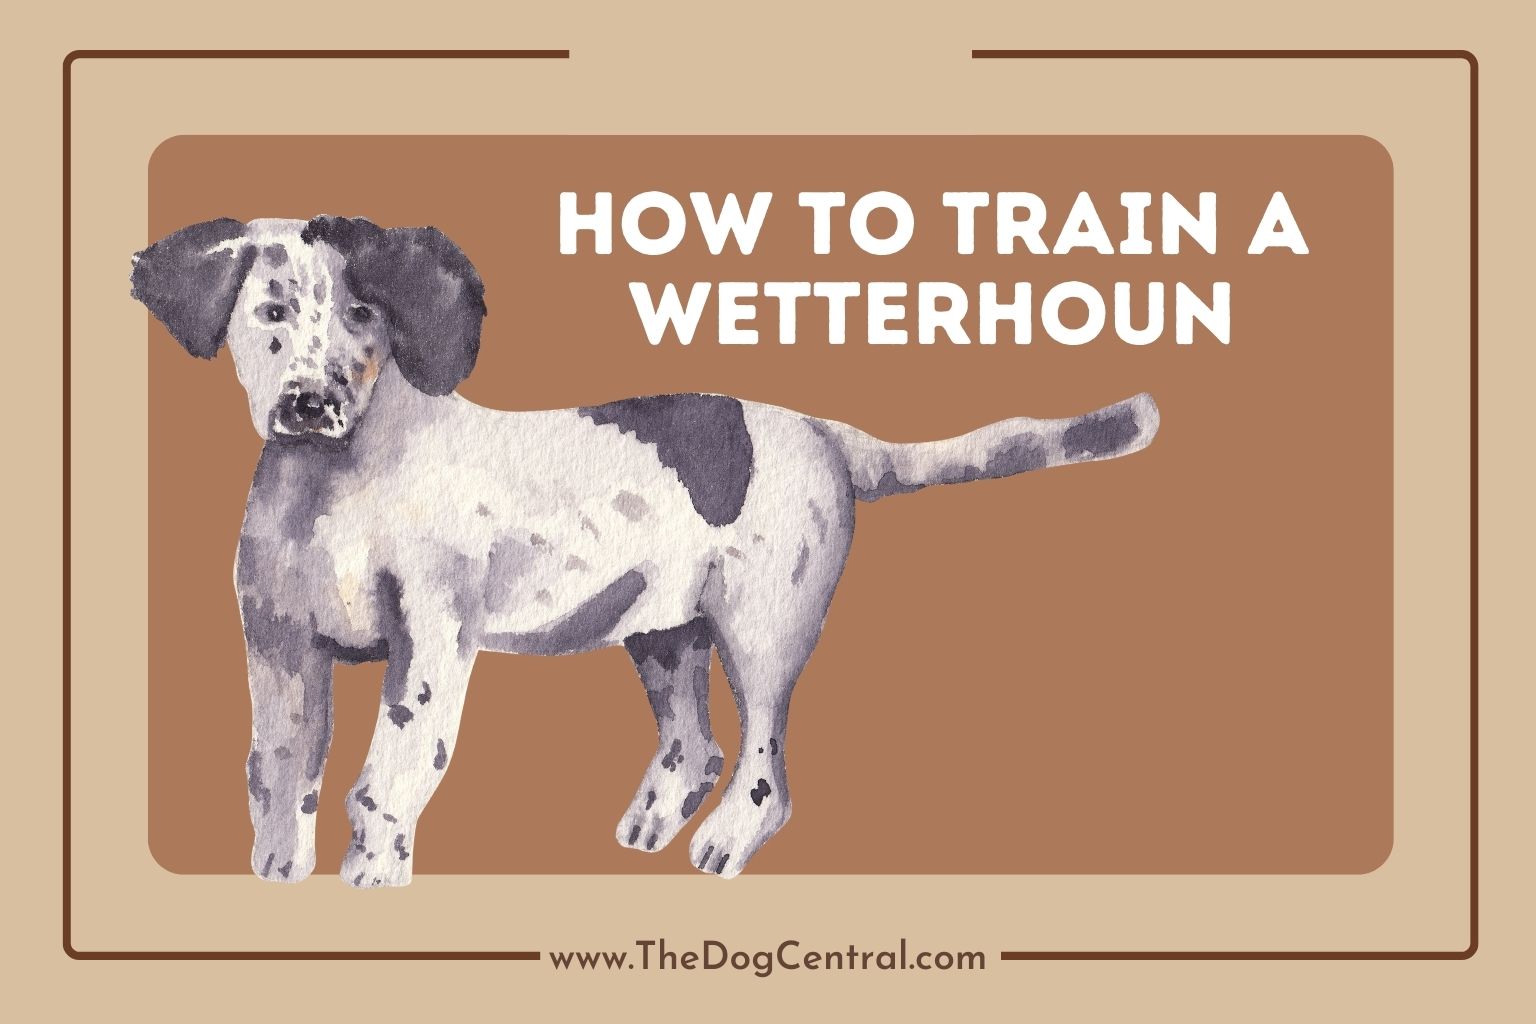 How to Train a Wetterhoun